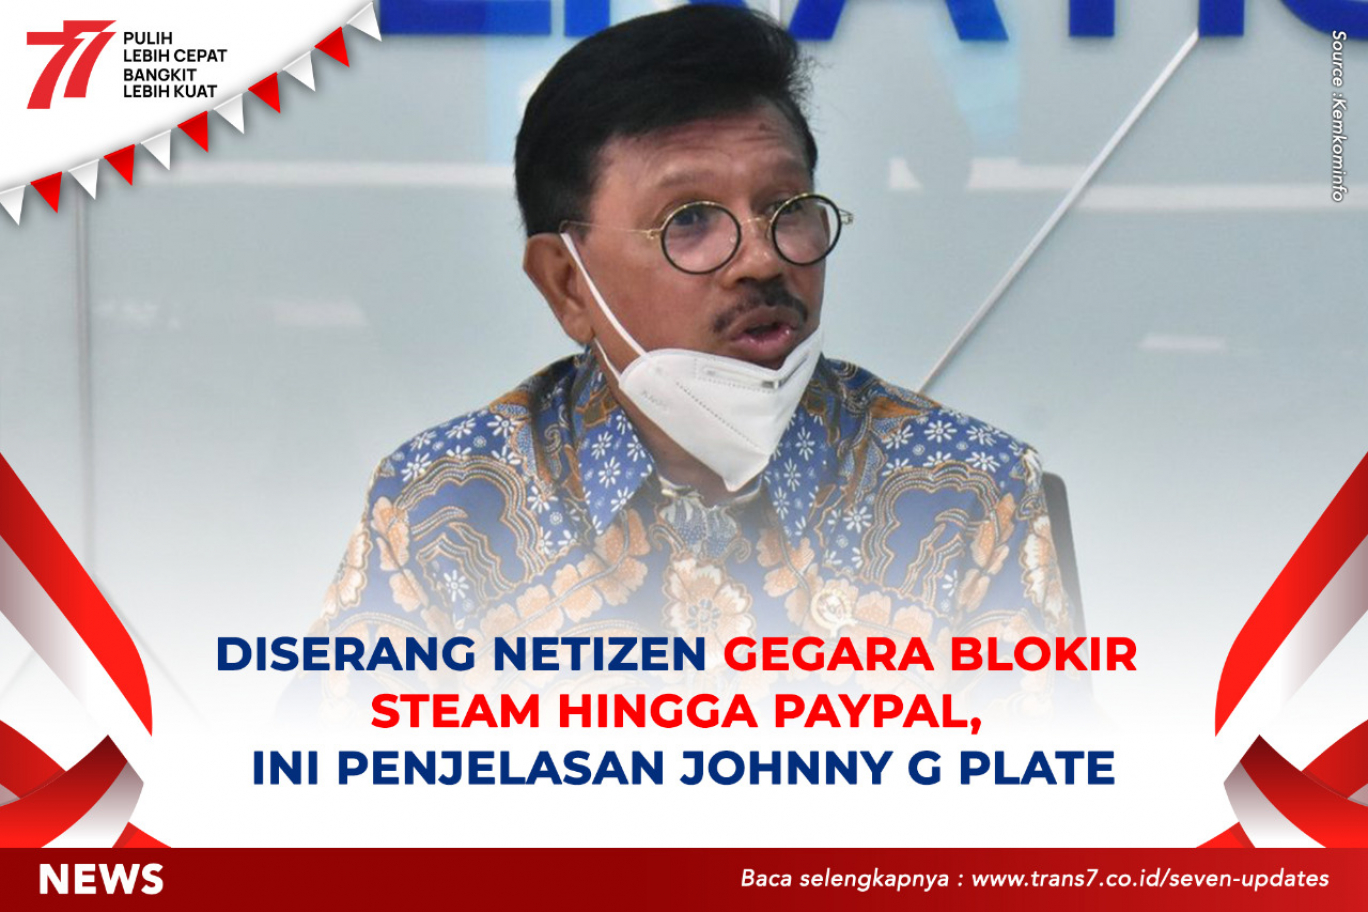 Johnny G Plate Diserang Netizen Gegara Blokir Steam Hingga Paypal. Steam Sudah Dibuka?